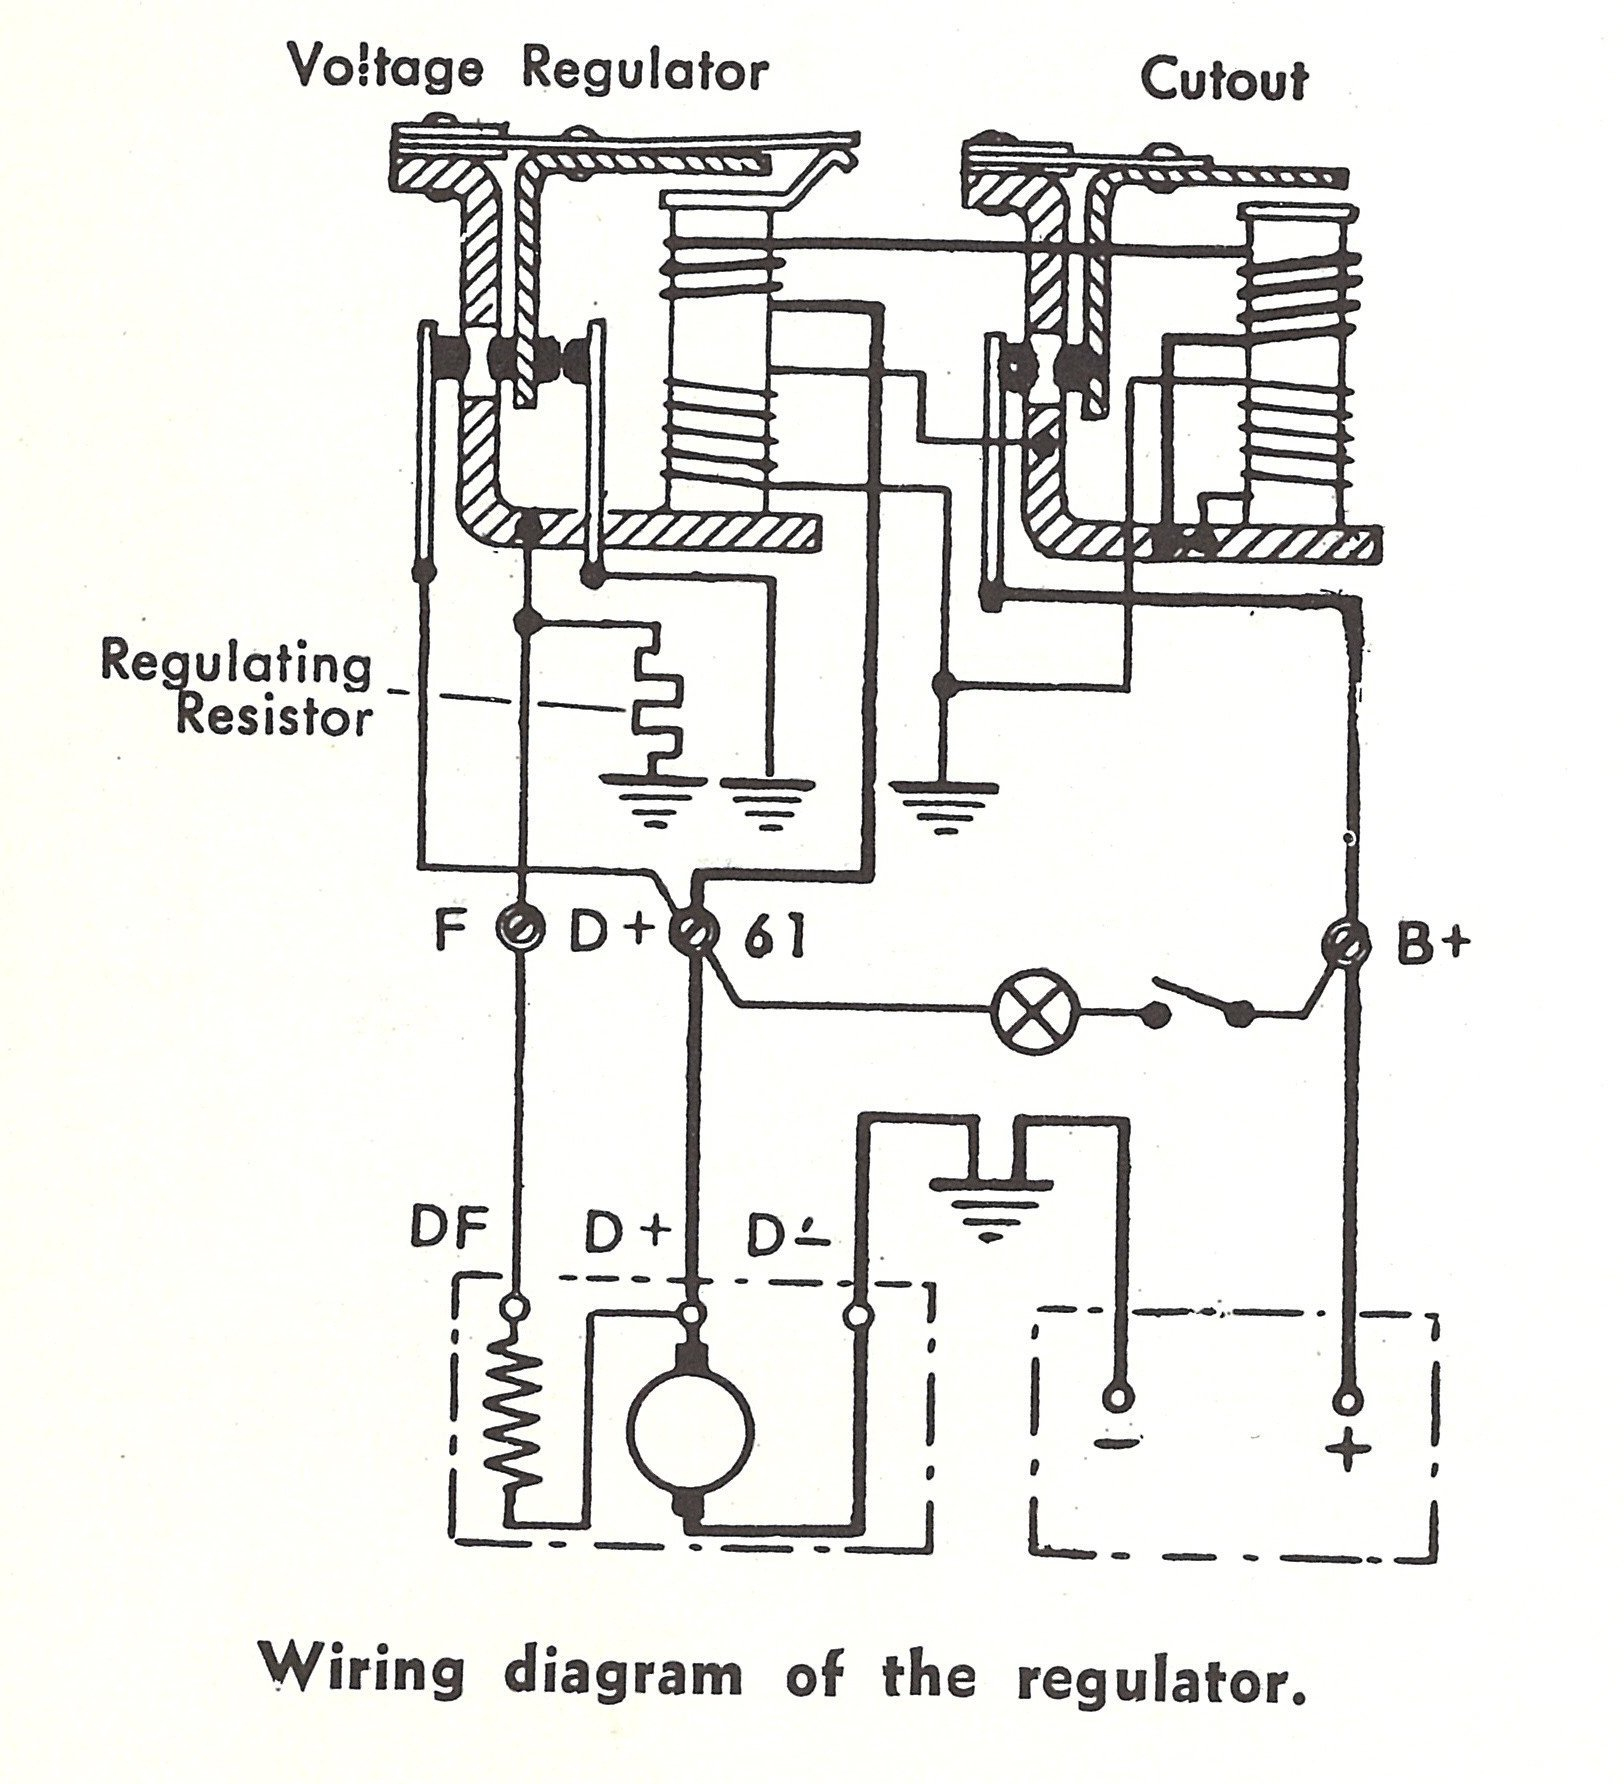 Voltage Regulator Wiring Diagram - Wiring Diagram.